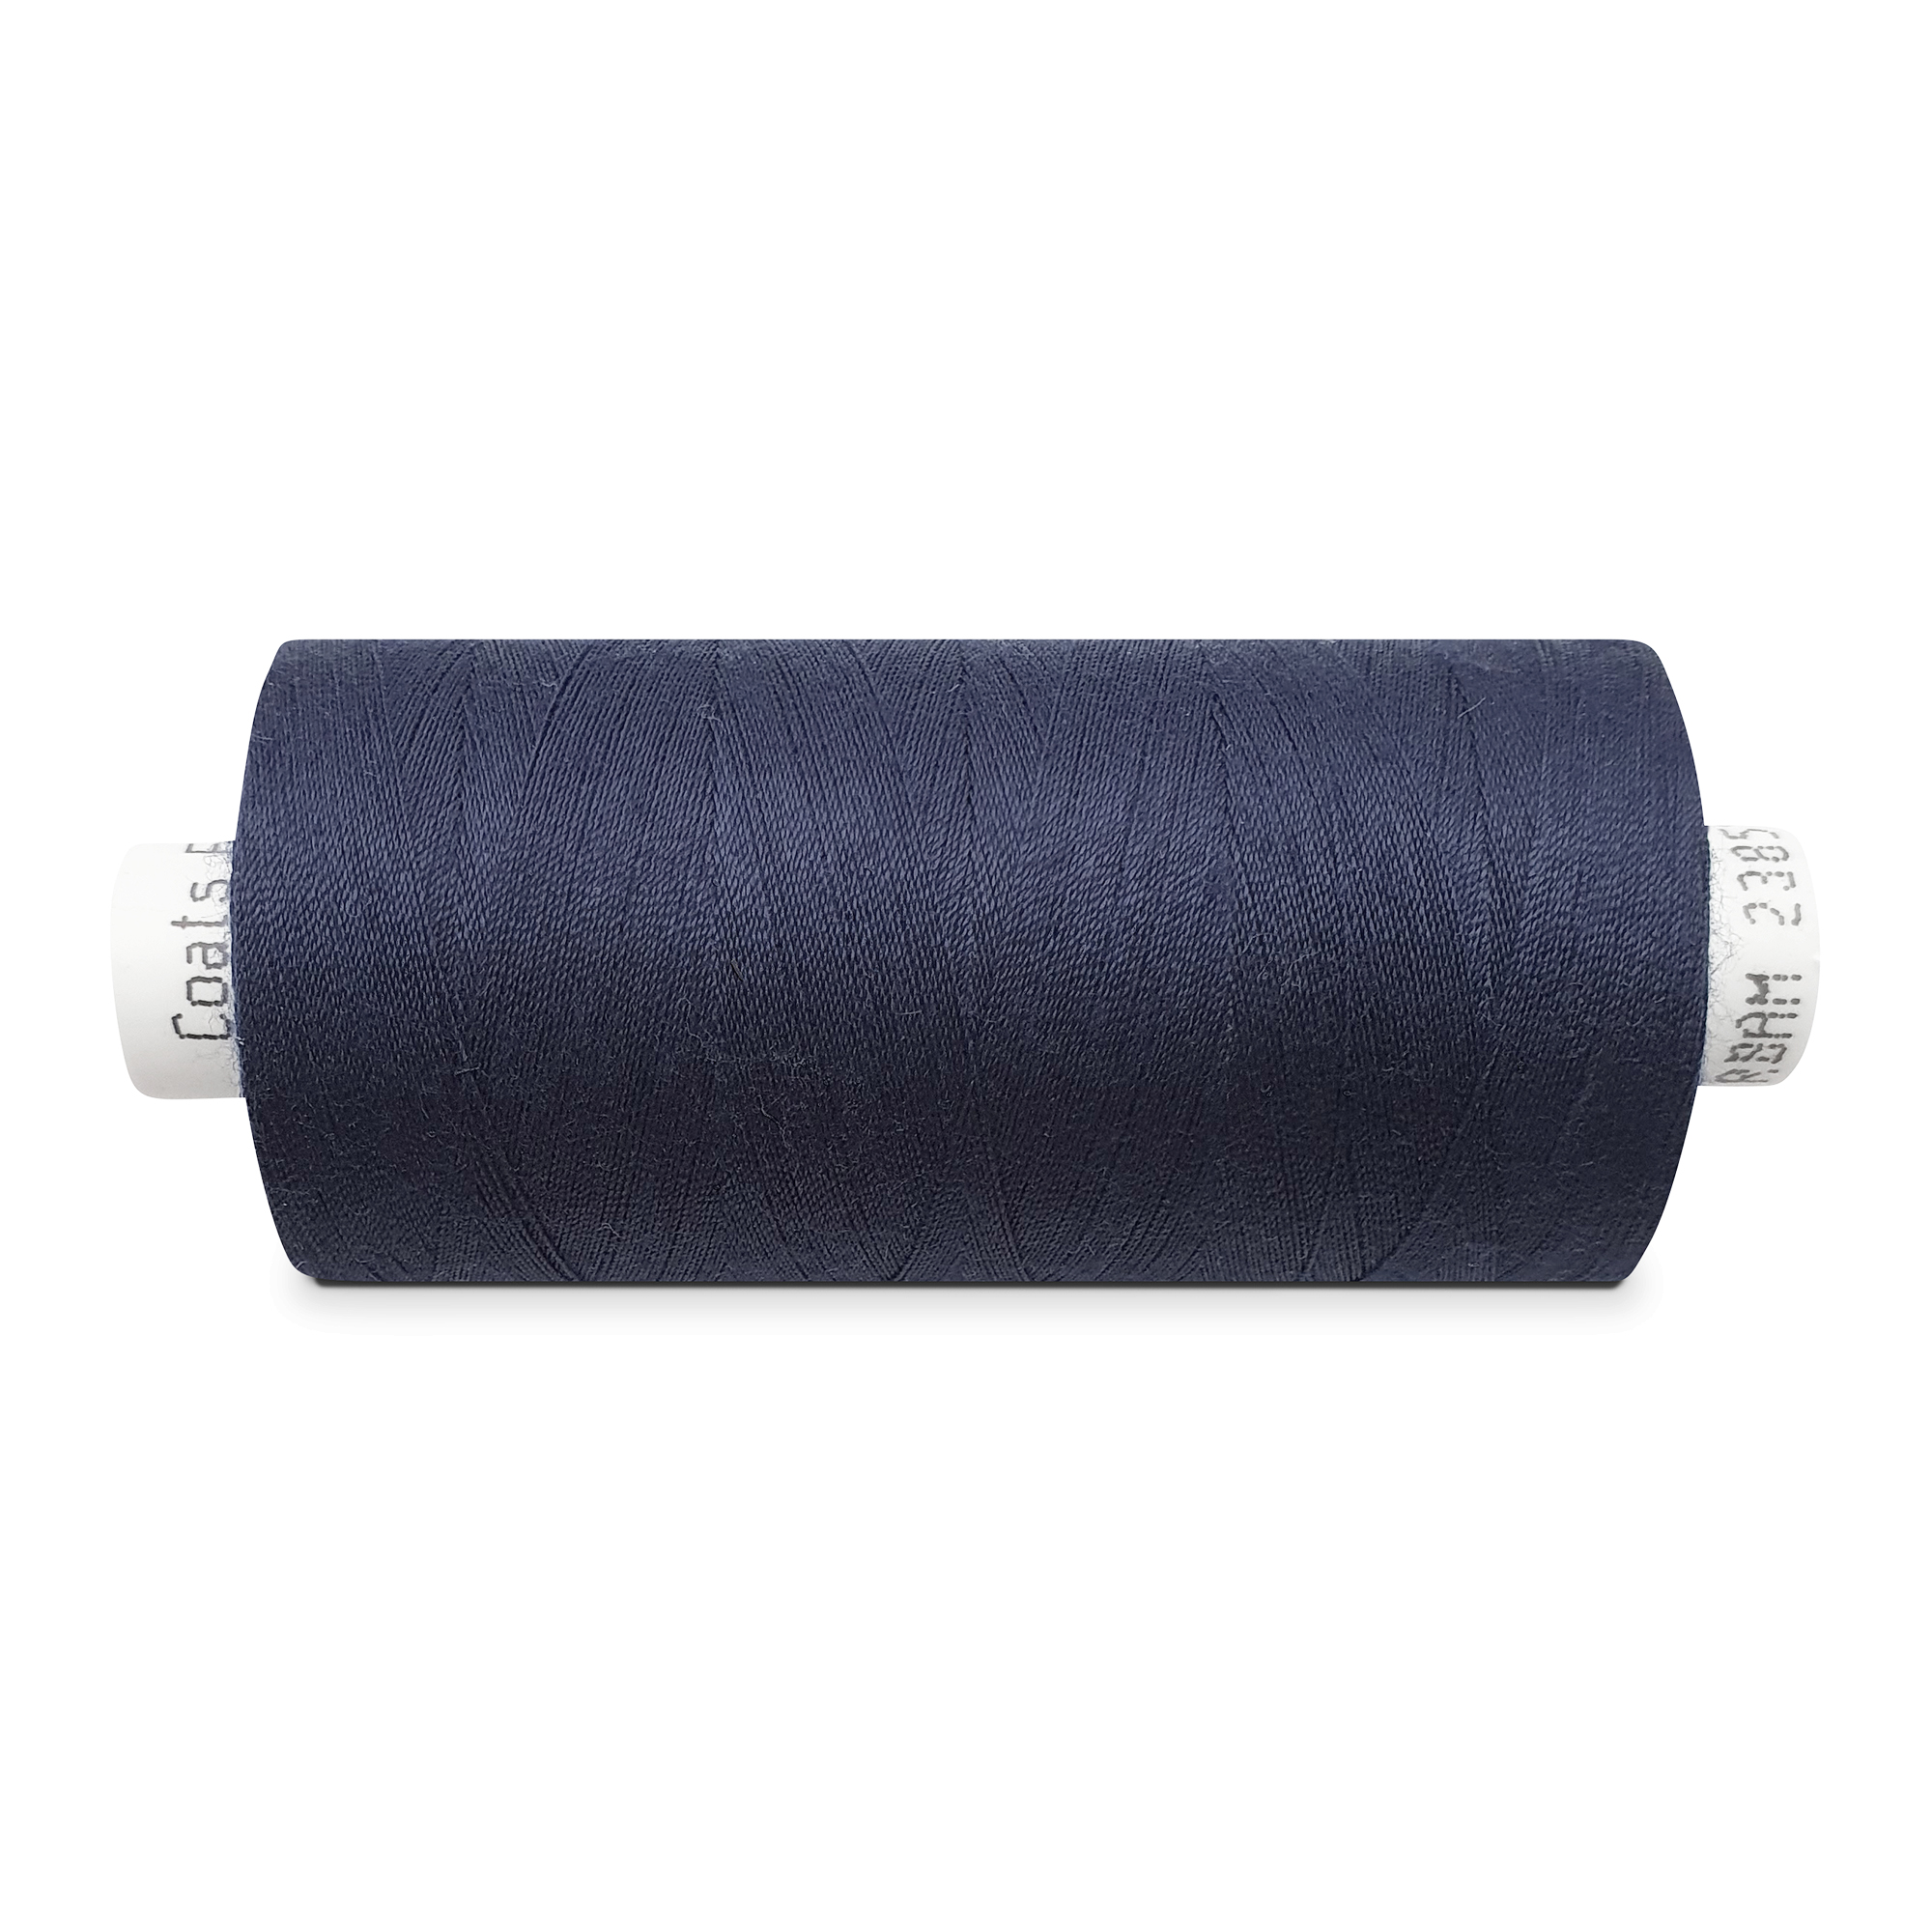 Jeans/Sewing thread matt black blue